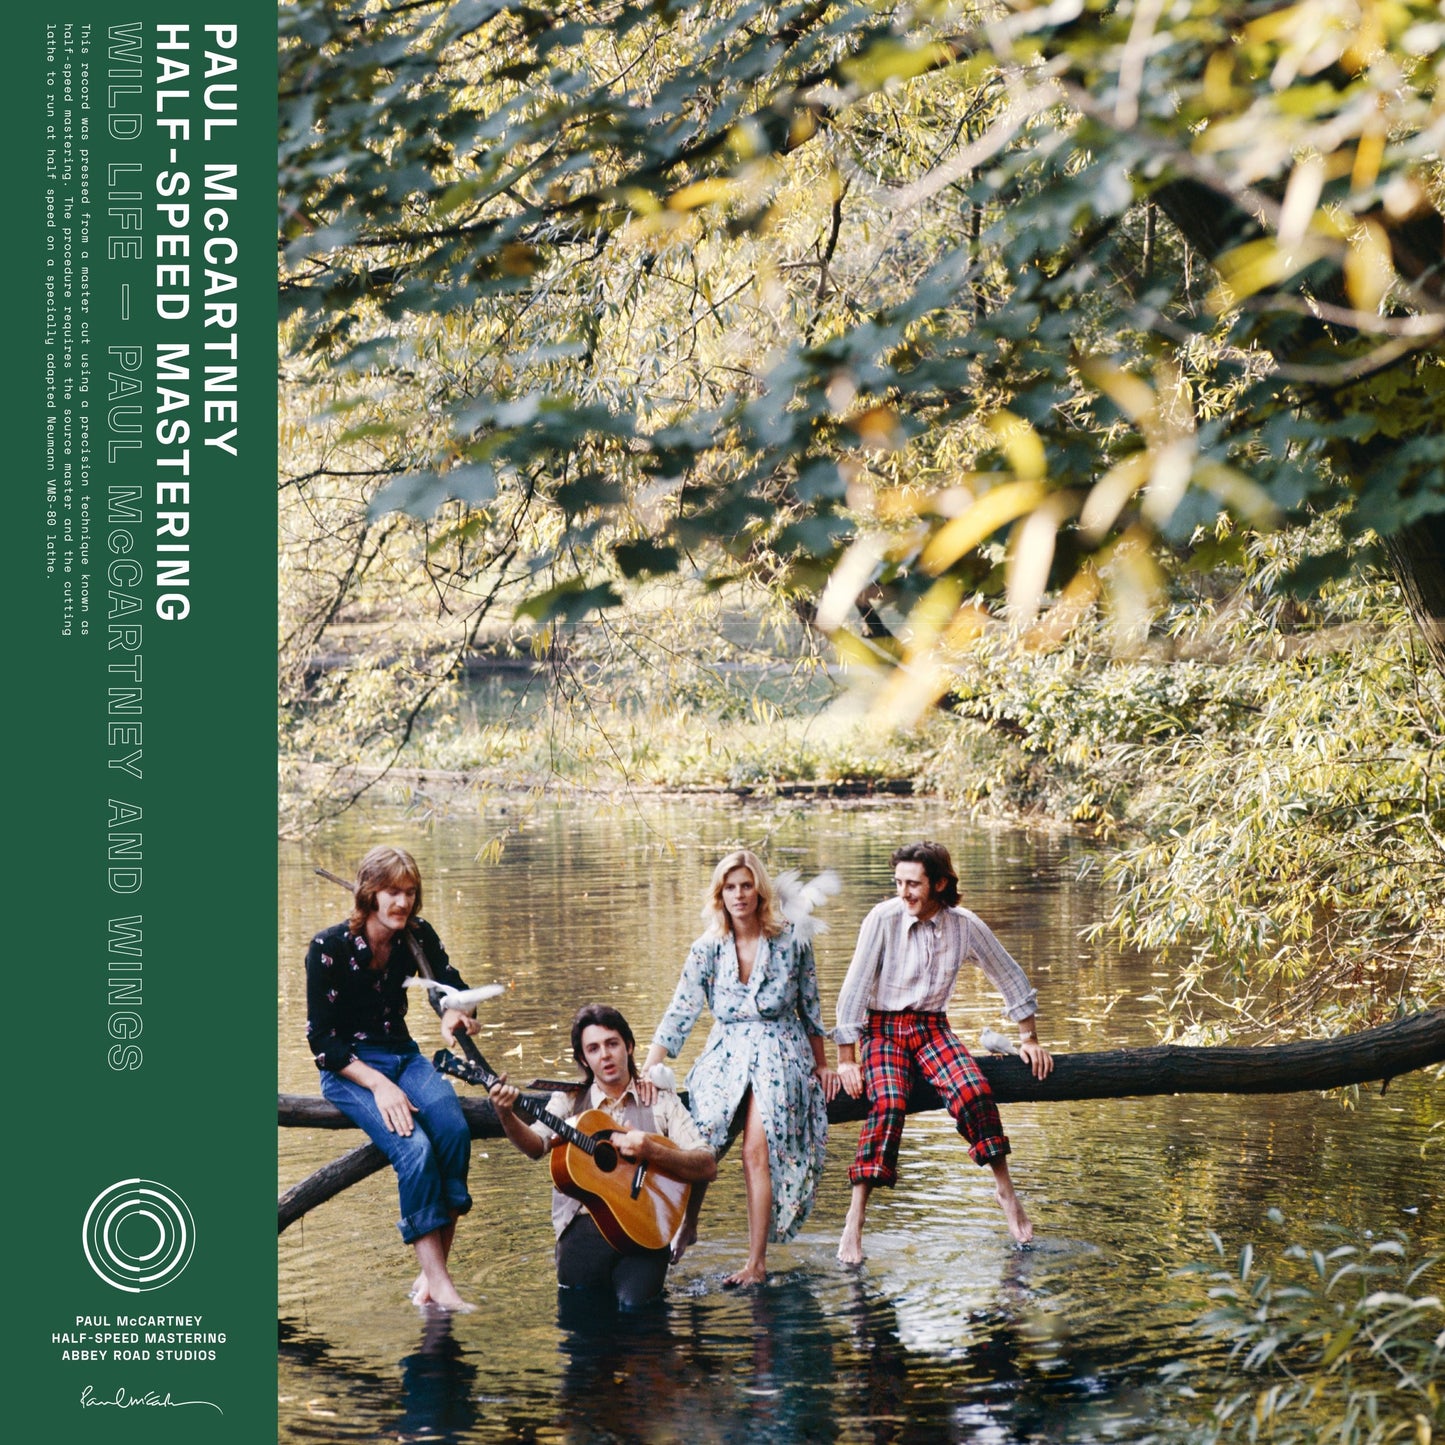 Paul McCartney & Wings - Wild Life (50th Anniversary) [Half-Speed Master LP] [Limited Edition] - Vinyl